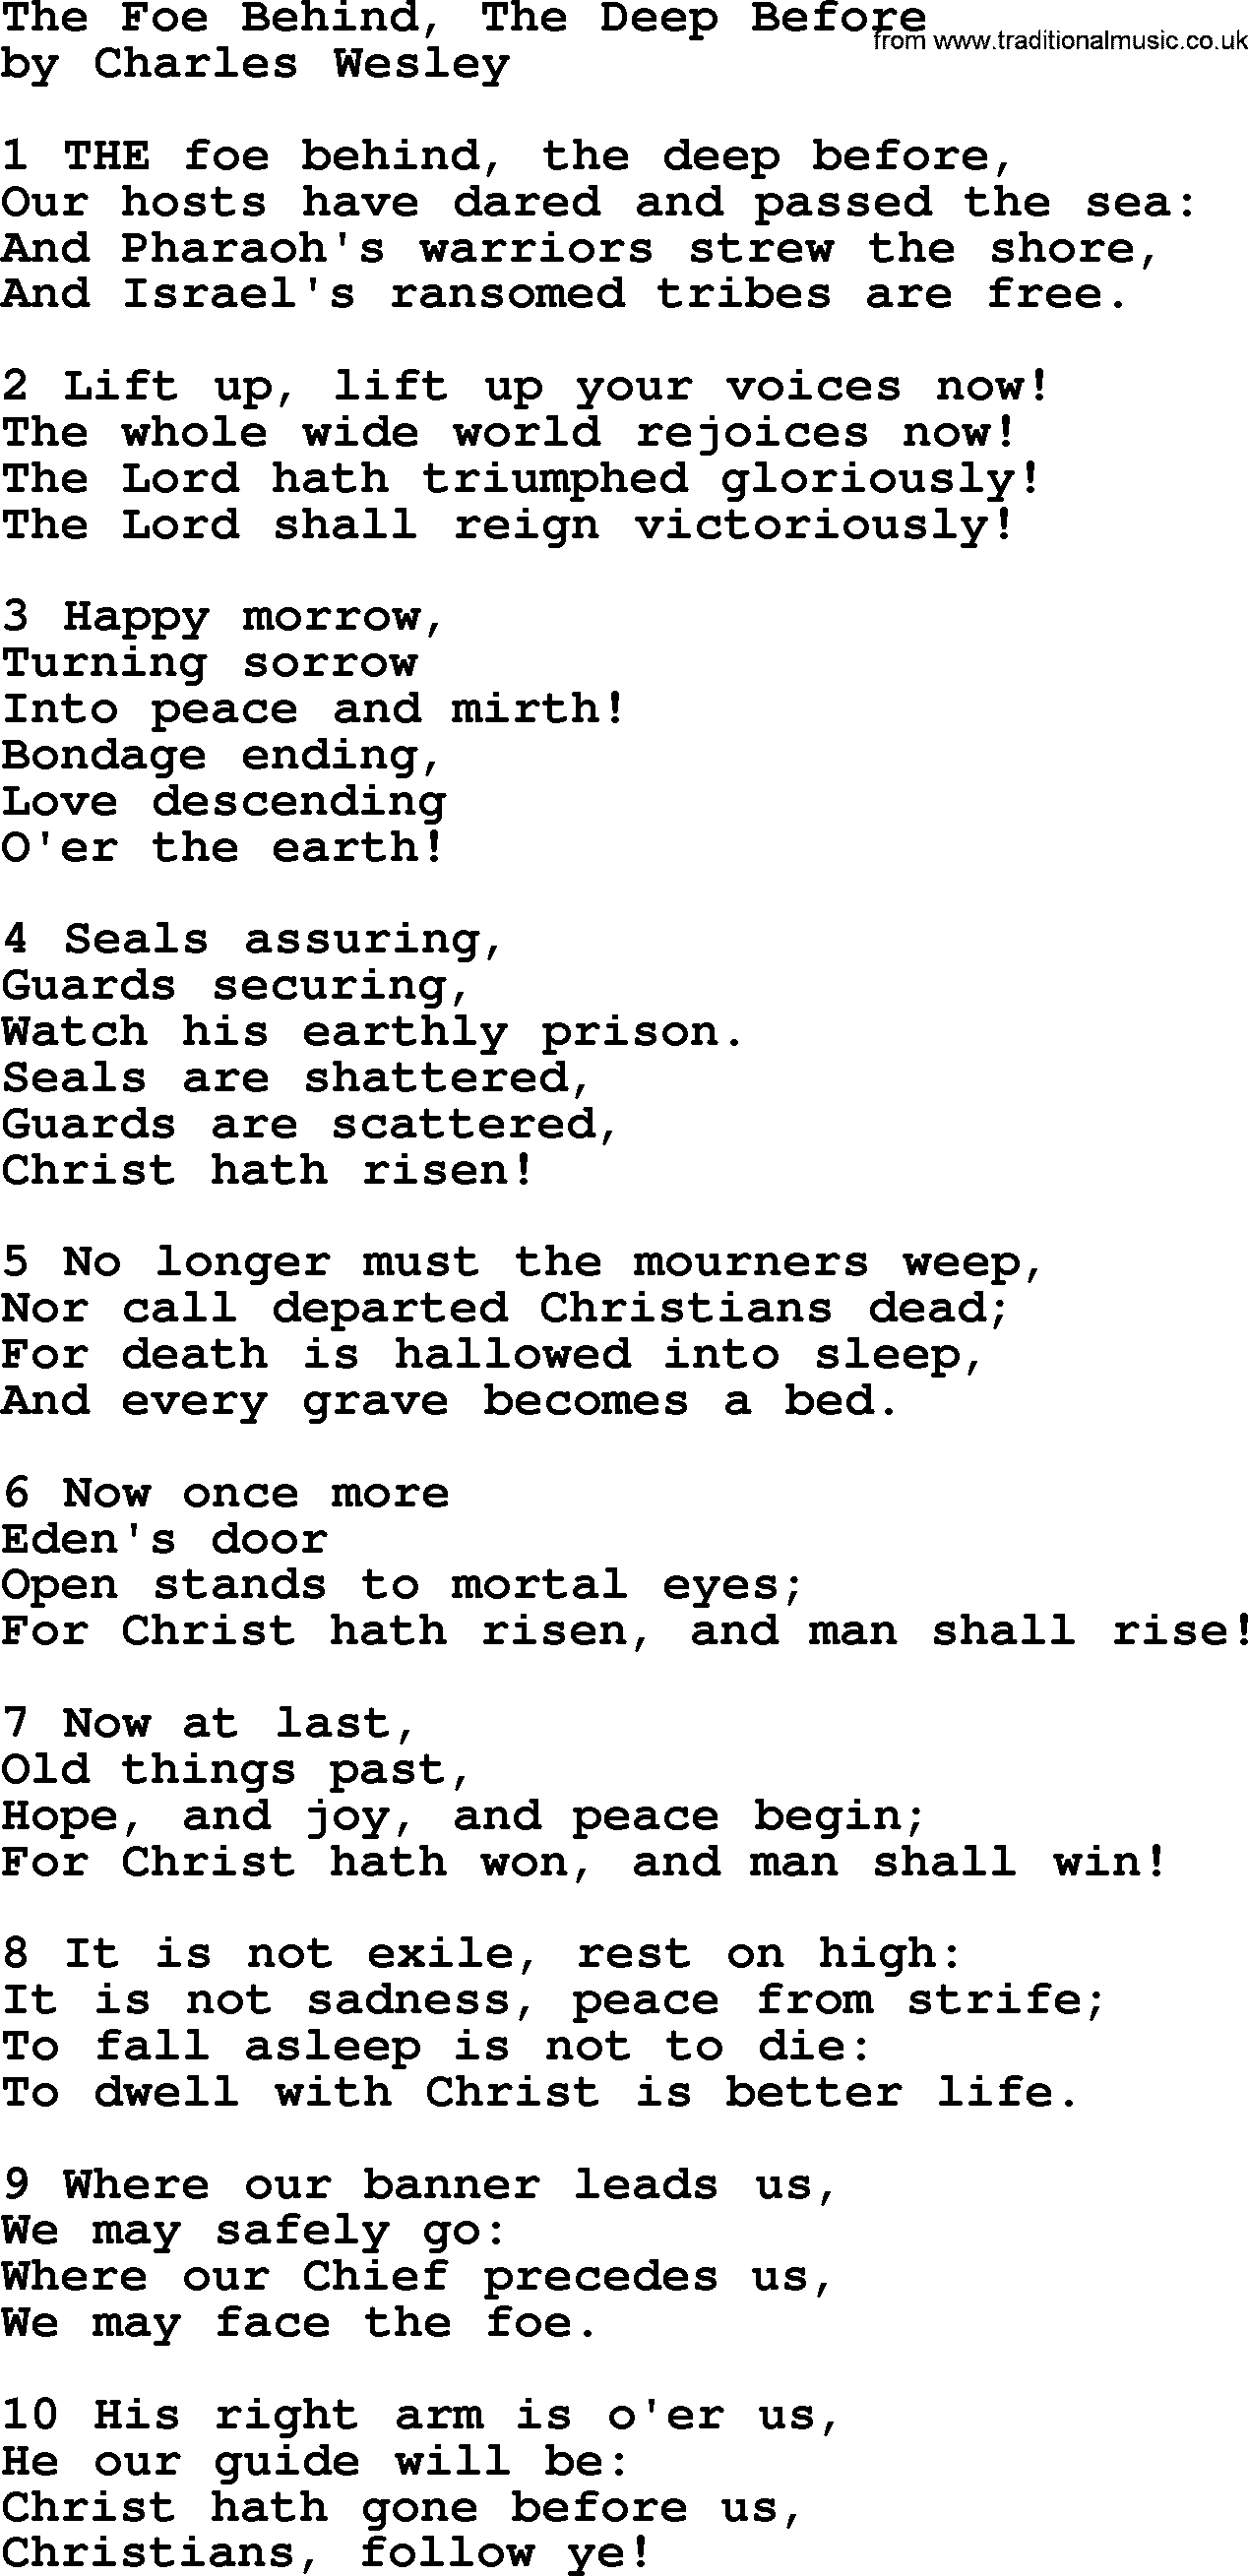 Charles Wesley hymn: The Foe Behind, The Deep Before, lyrics